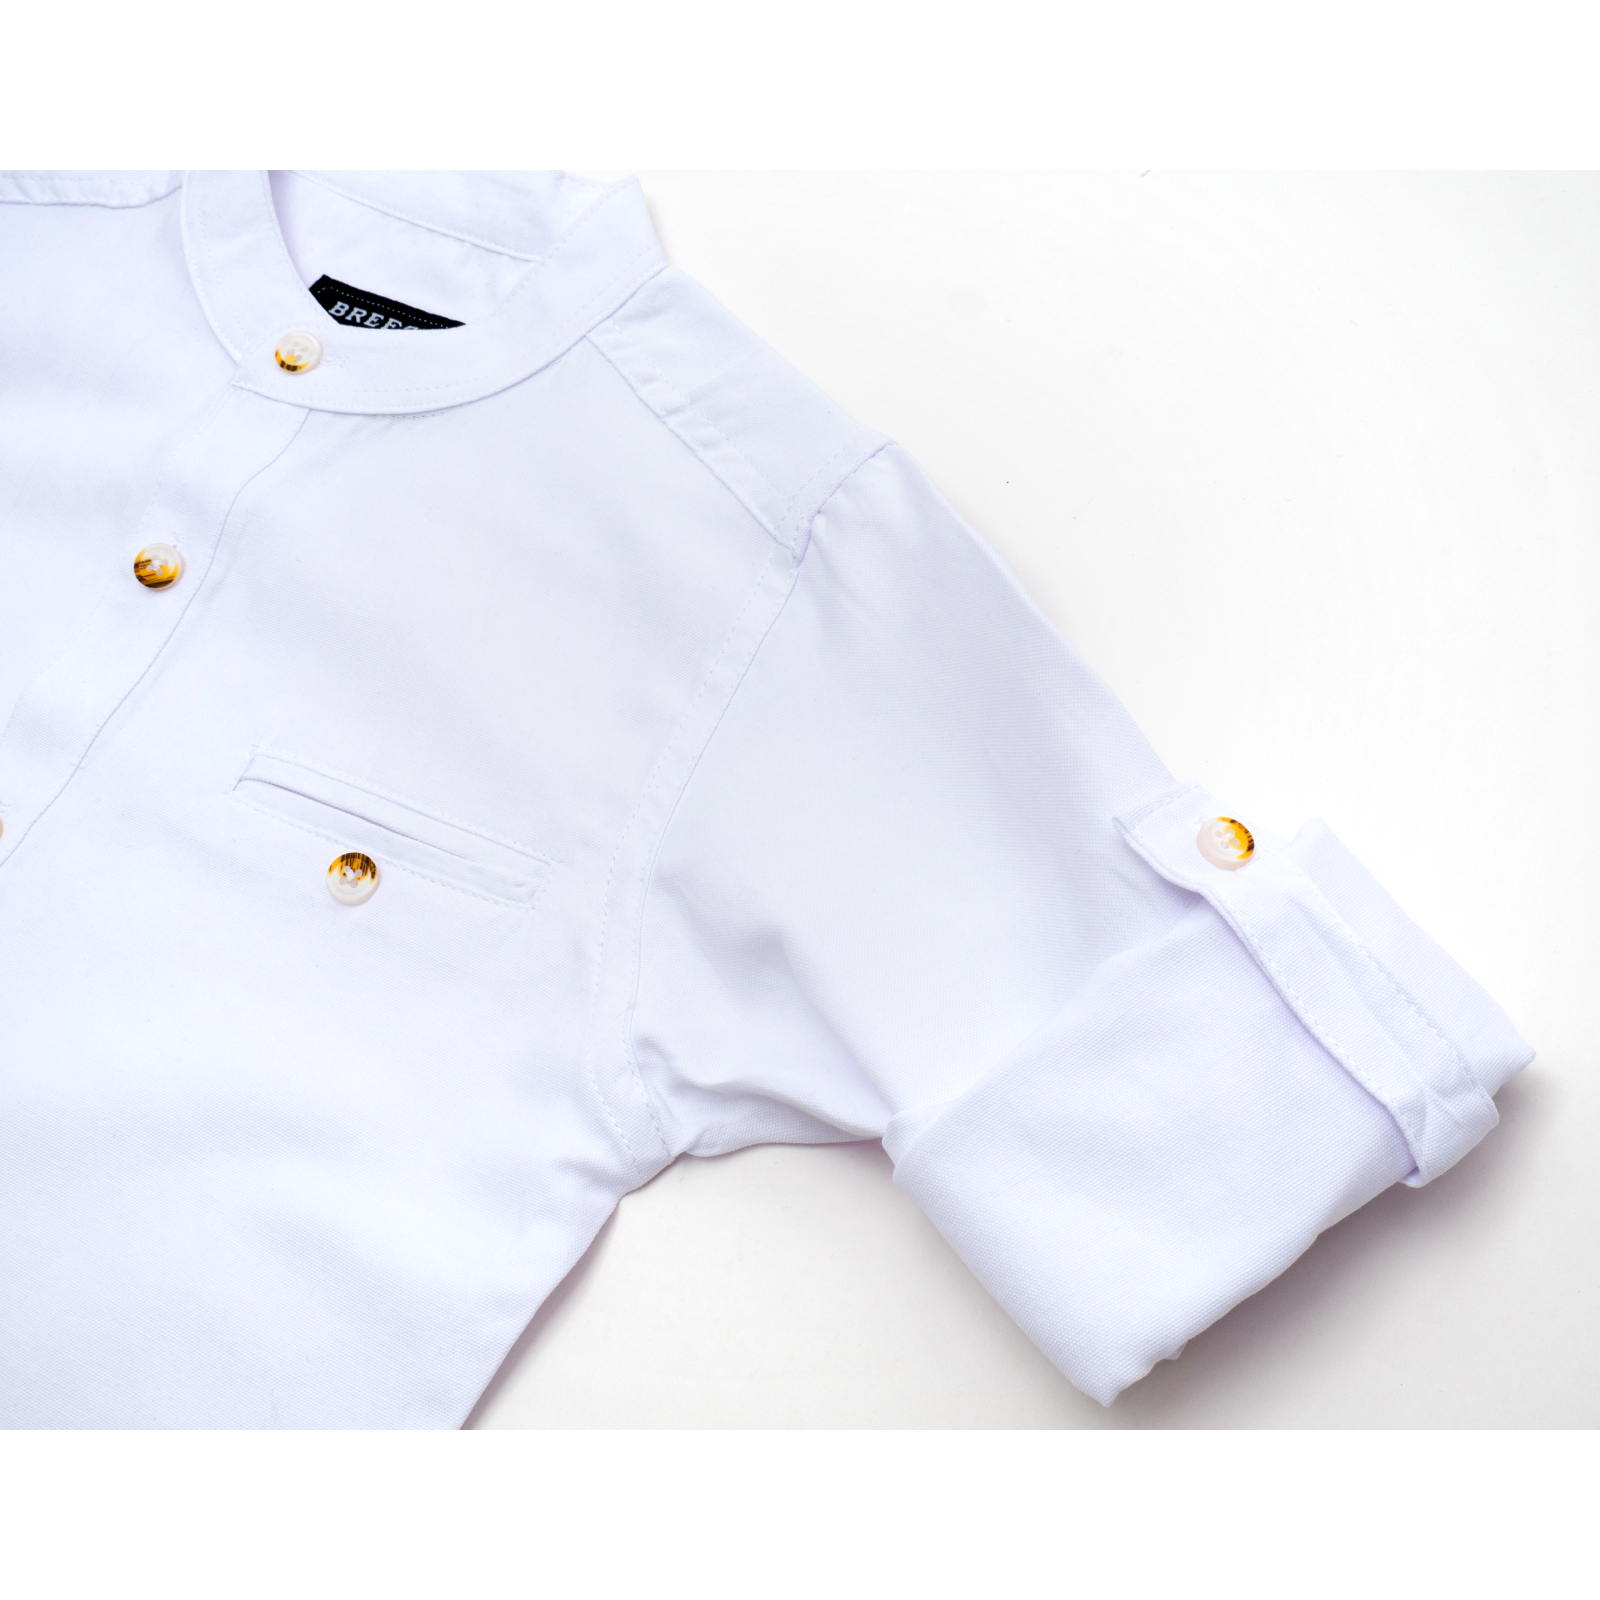 Рубашка Breeze для школы (G-457-146B-white) изображение 3